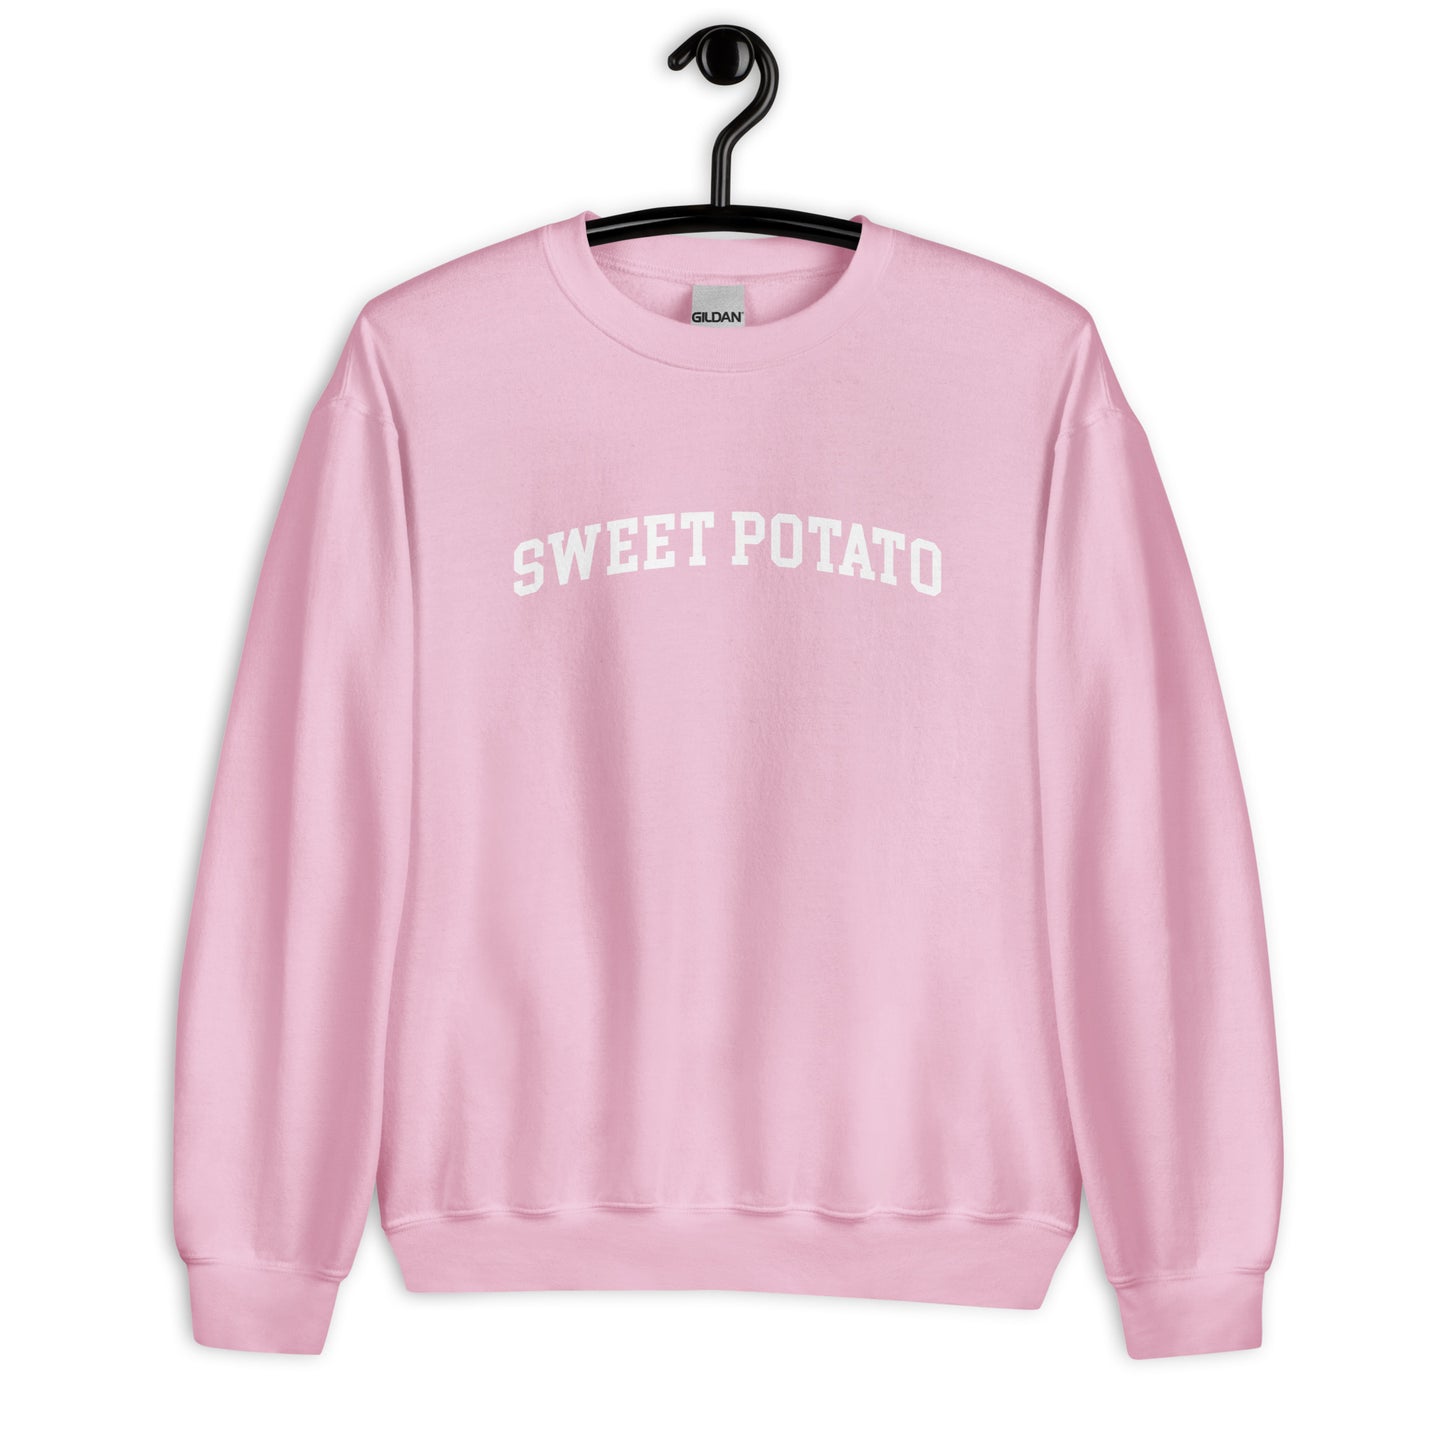 Sweet Potato Sweatshirt - Arched Font